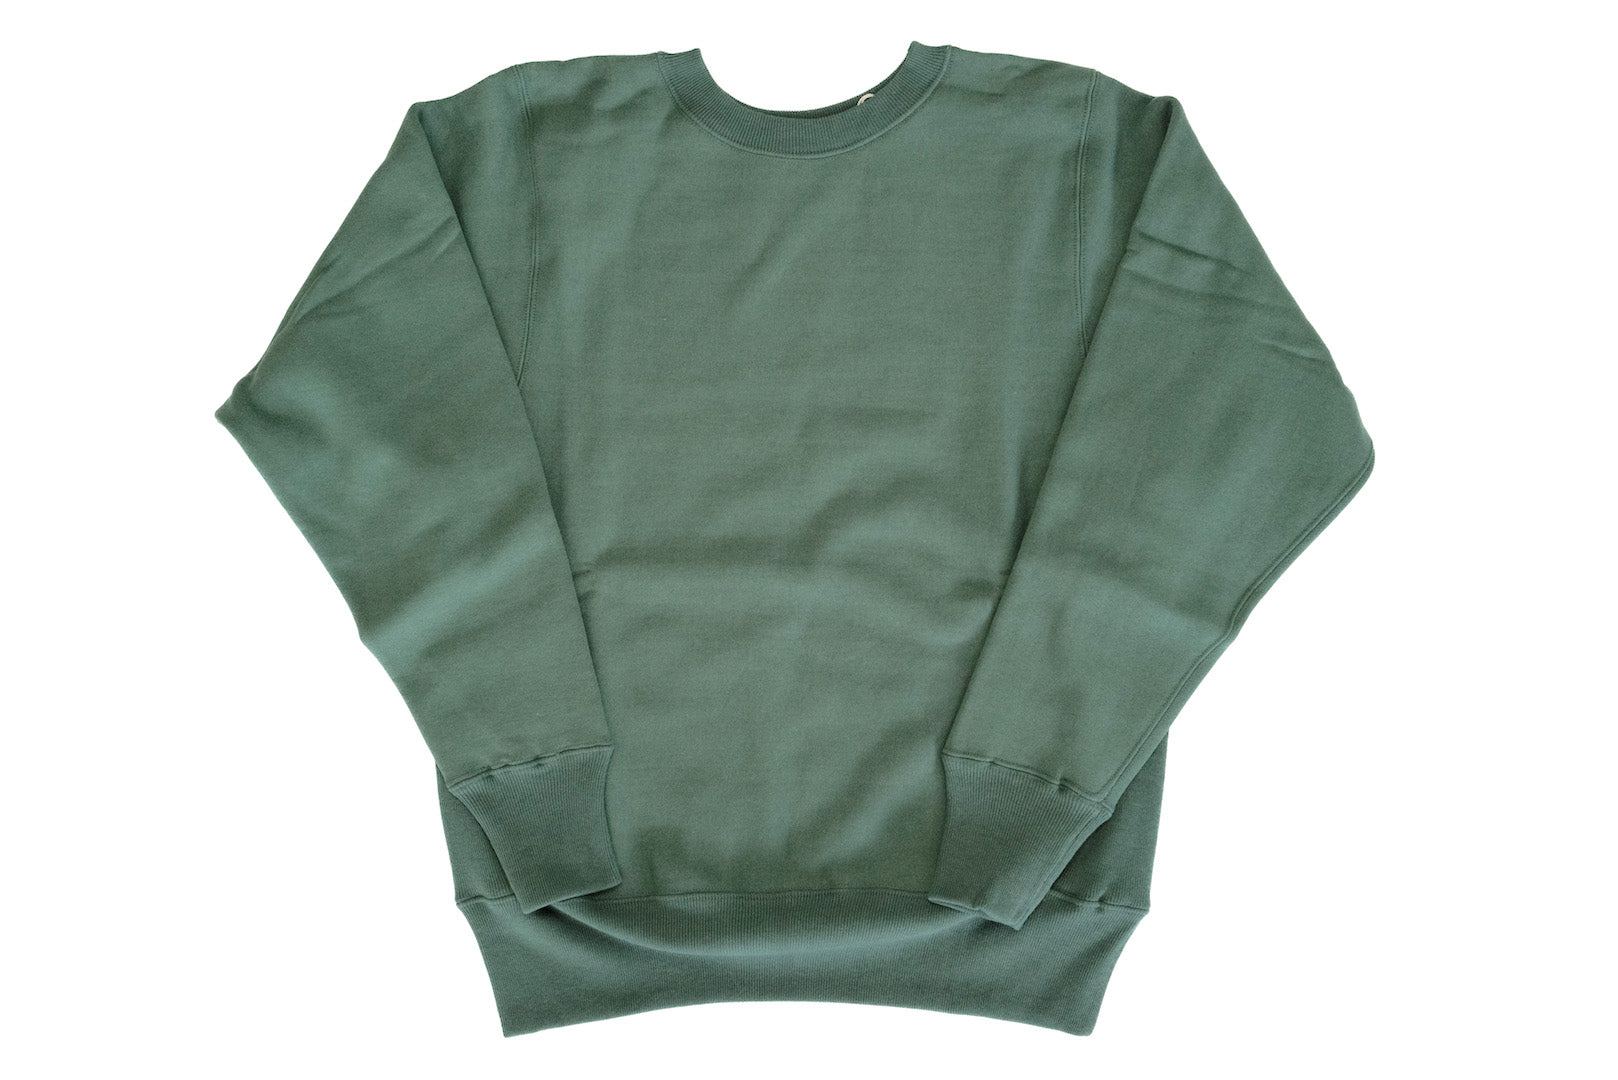 Warehouse Lot.483 12oz "Ultra-Heavy" Loopwheeled Sweatshirt (Green)